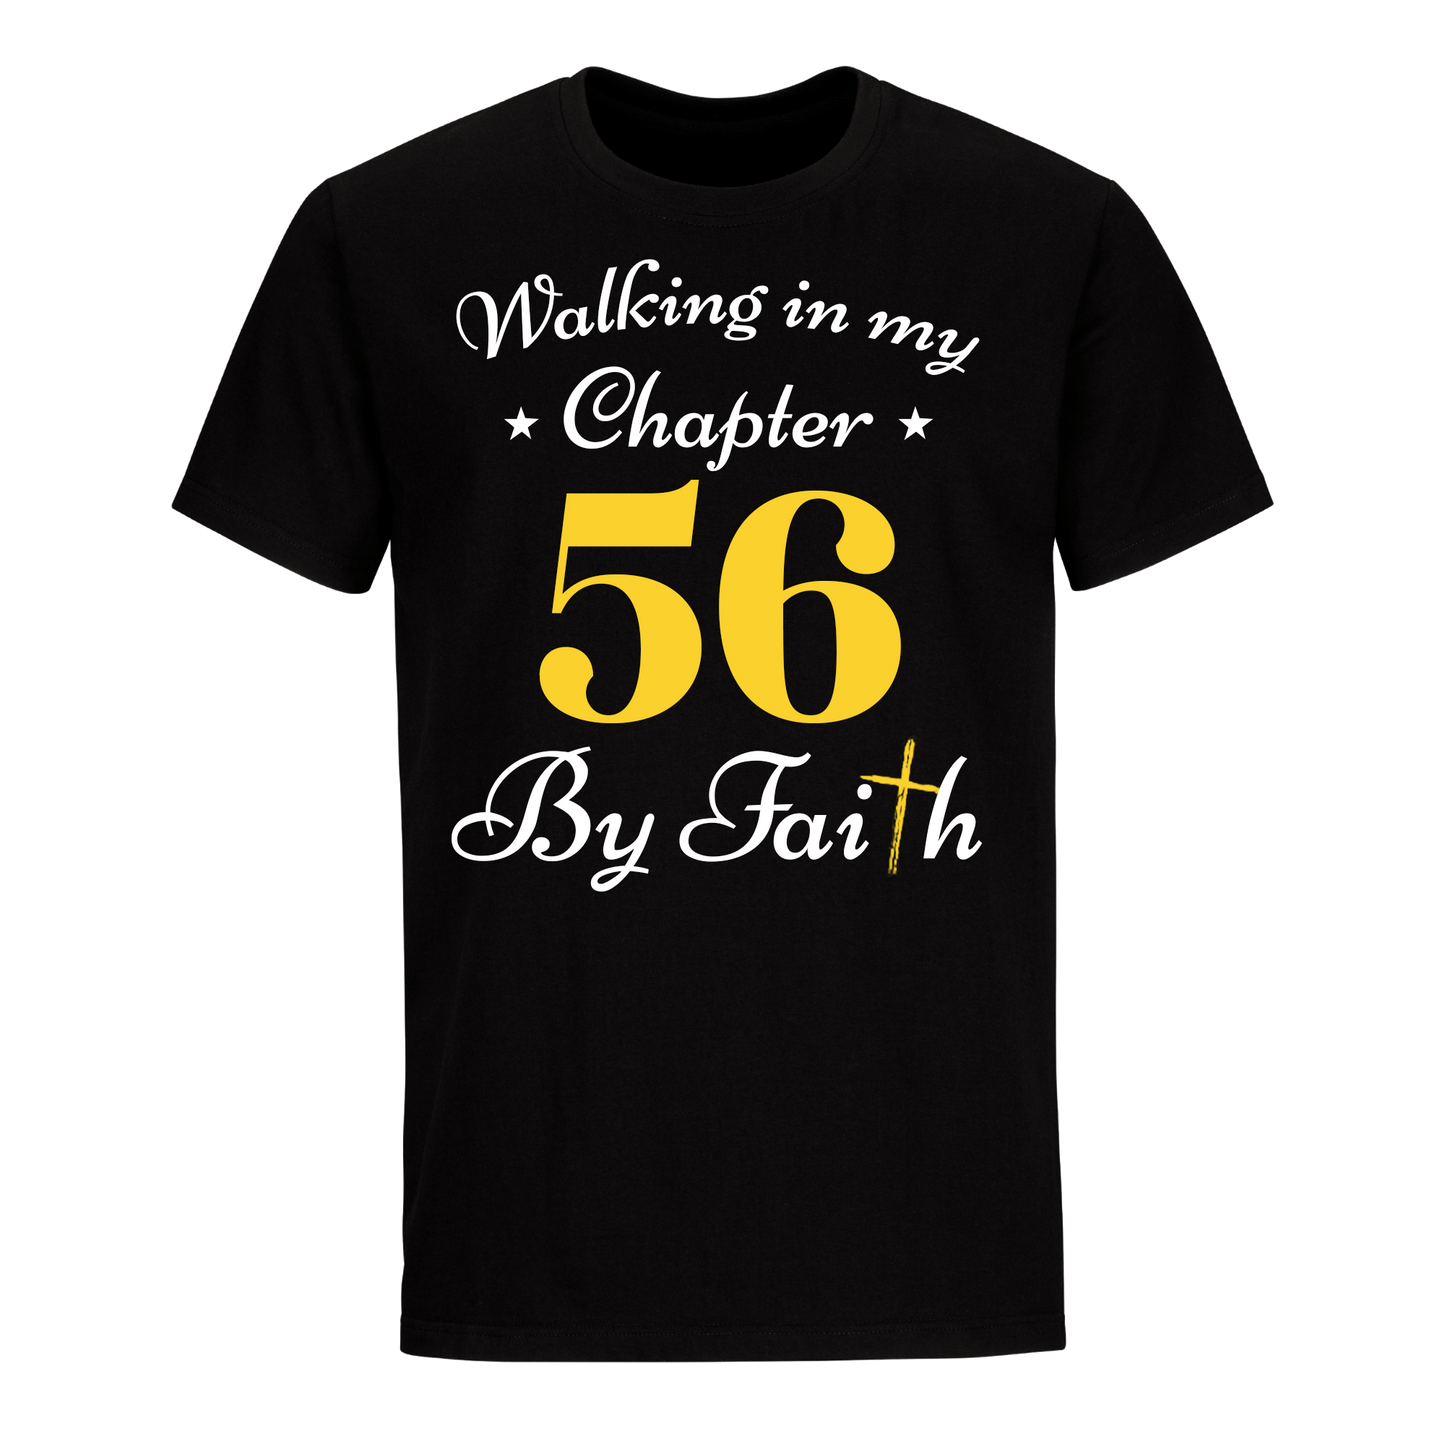 WALKING CHAPTER 56 BY FAITH UNISEX SHIRT